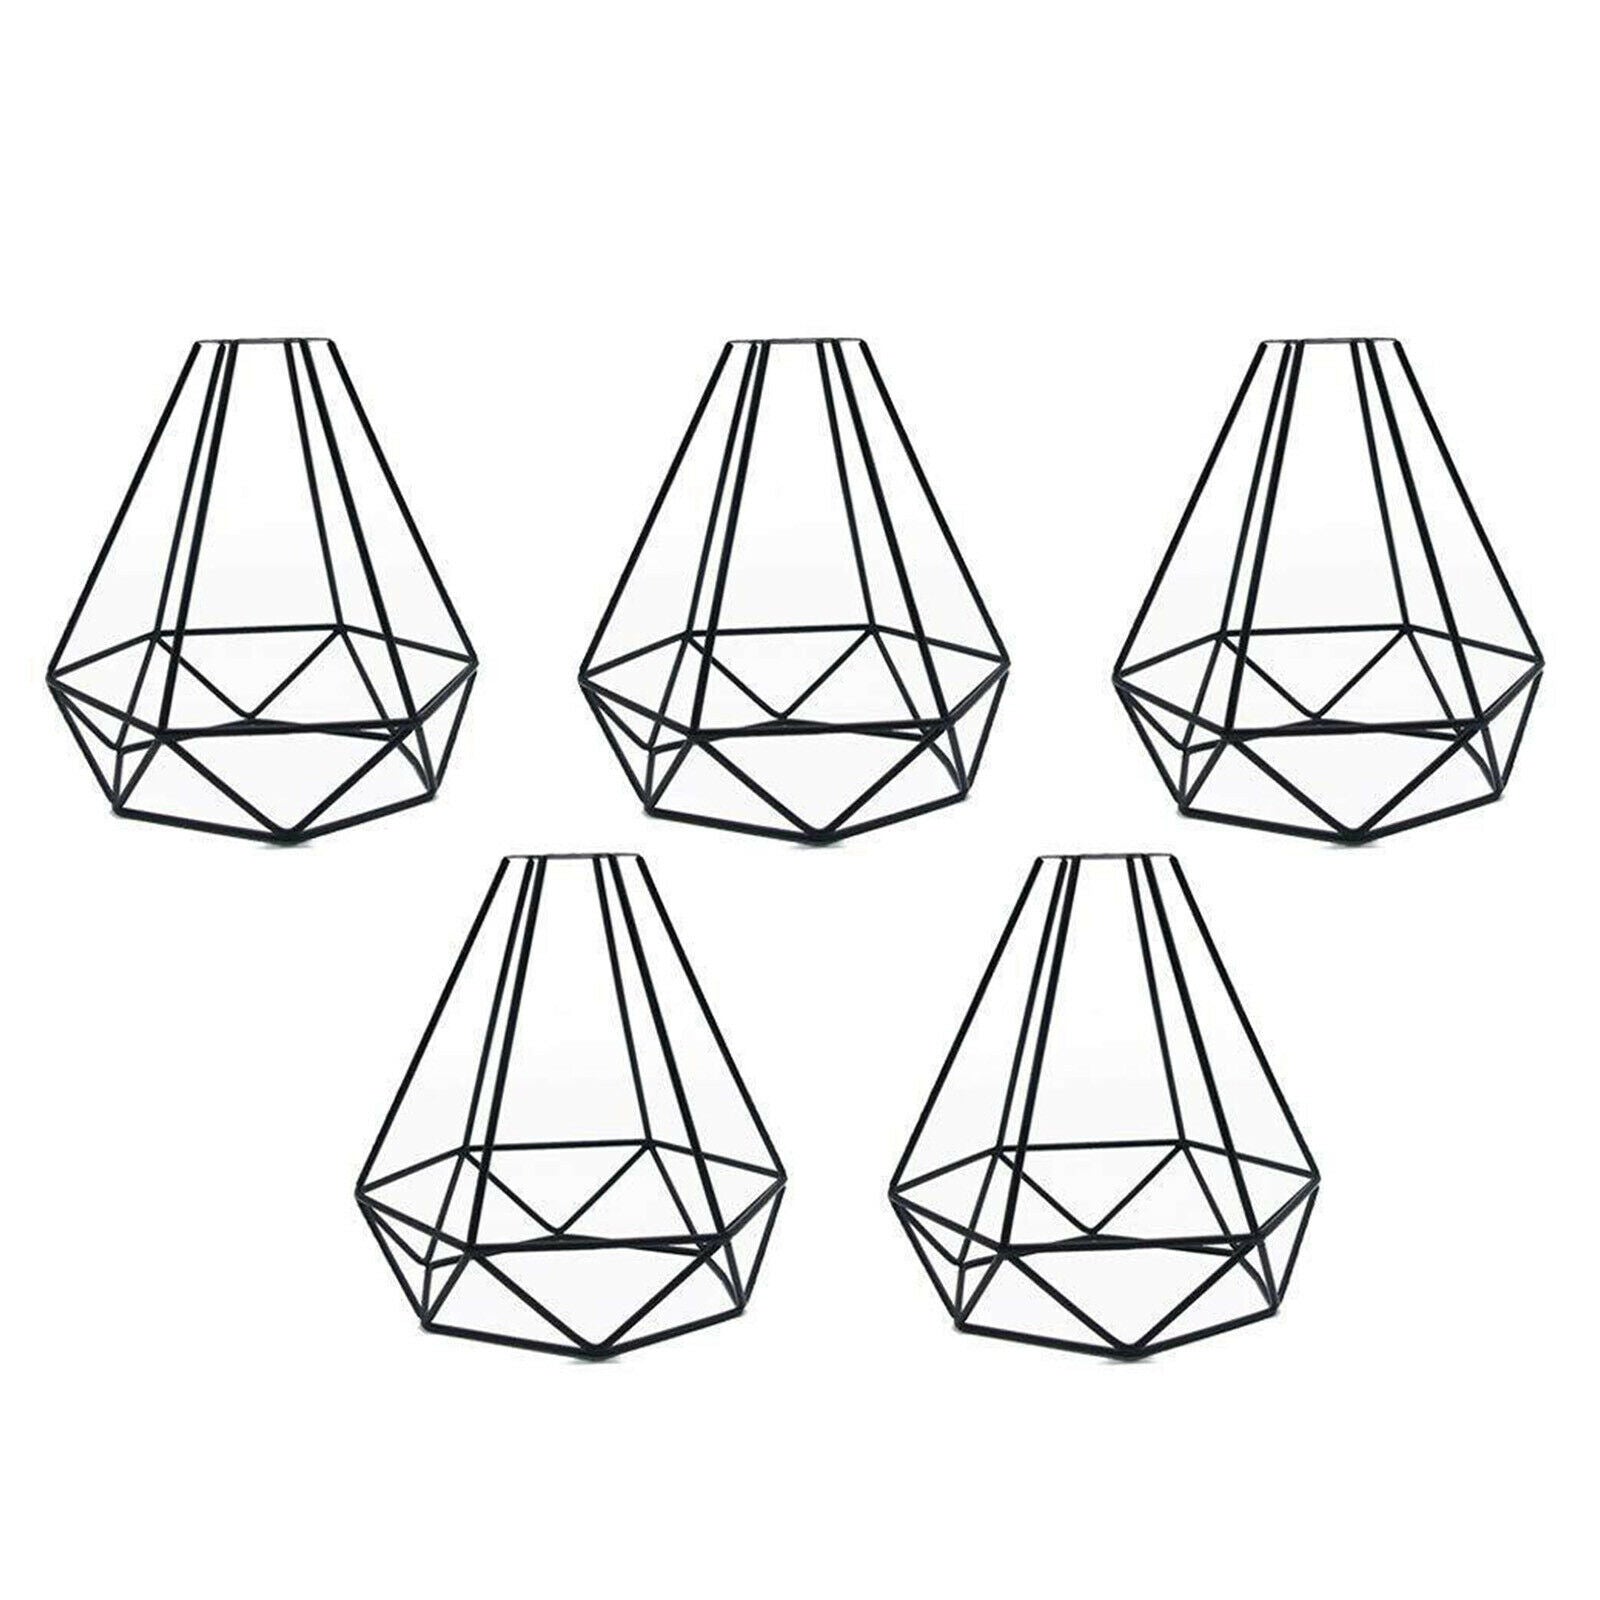 Modern Geometric Metal Wire Hanging Ceiling Lights Pendant Fixture Lamp Shade